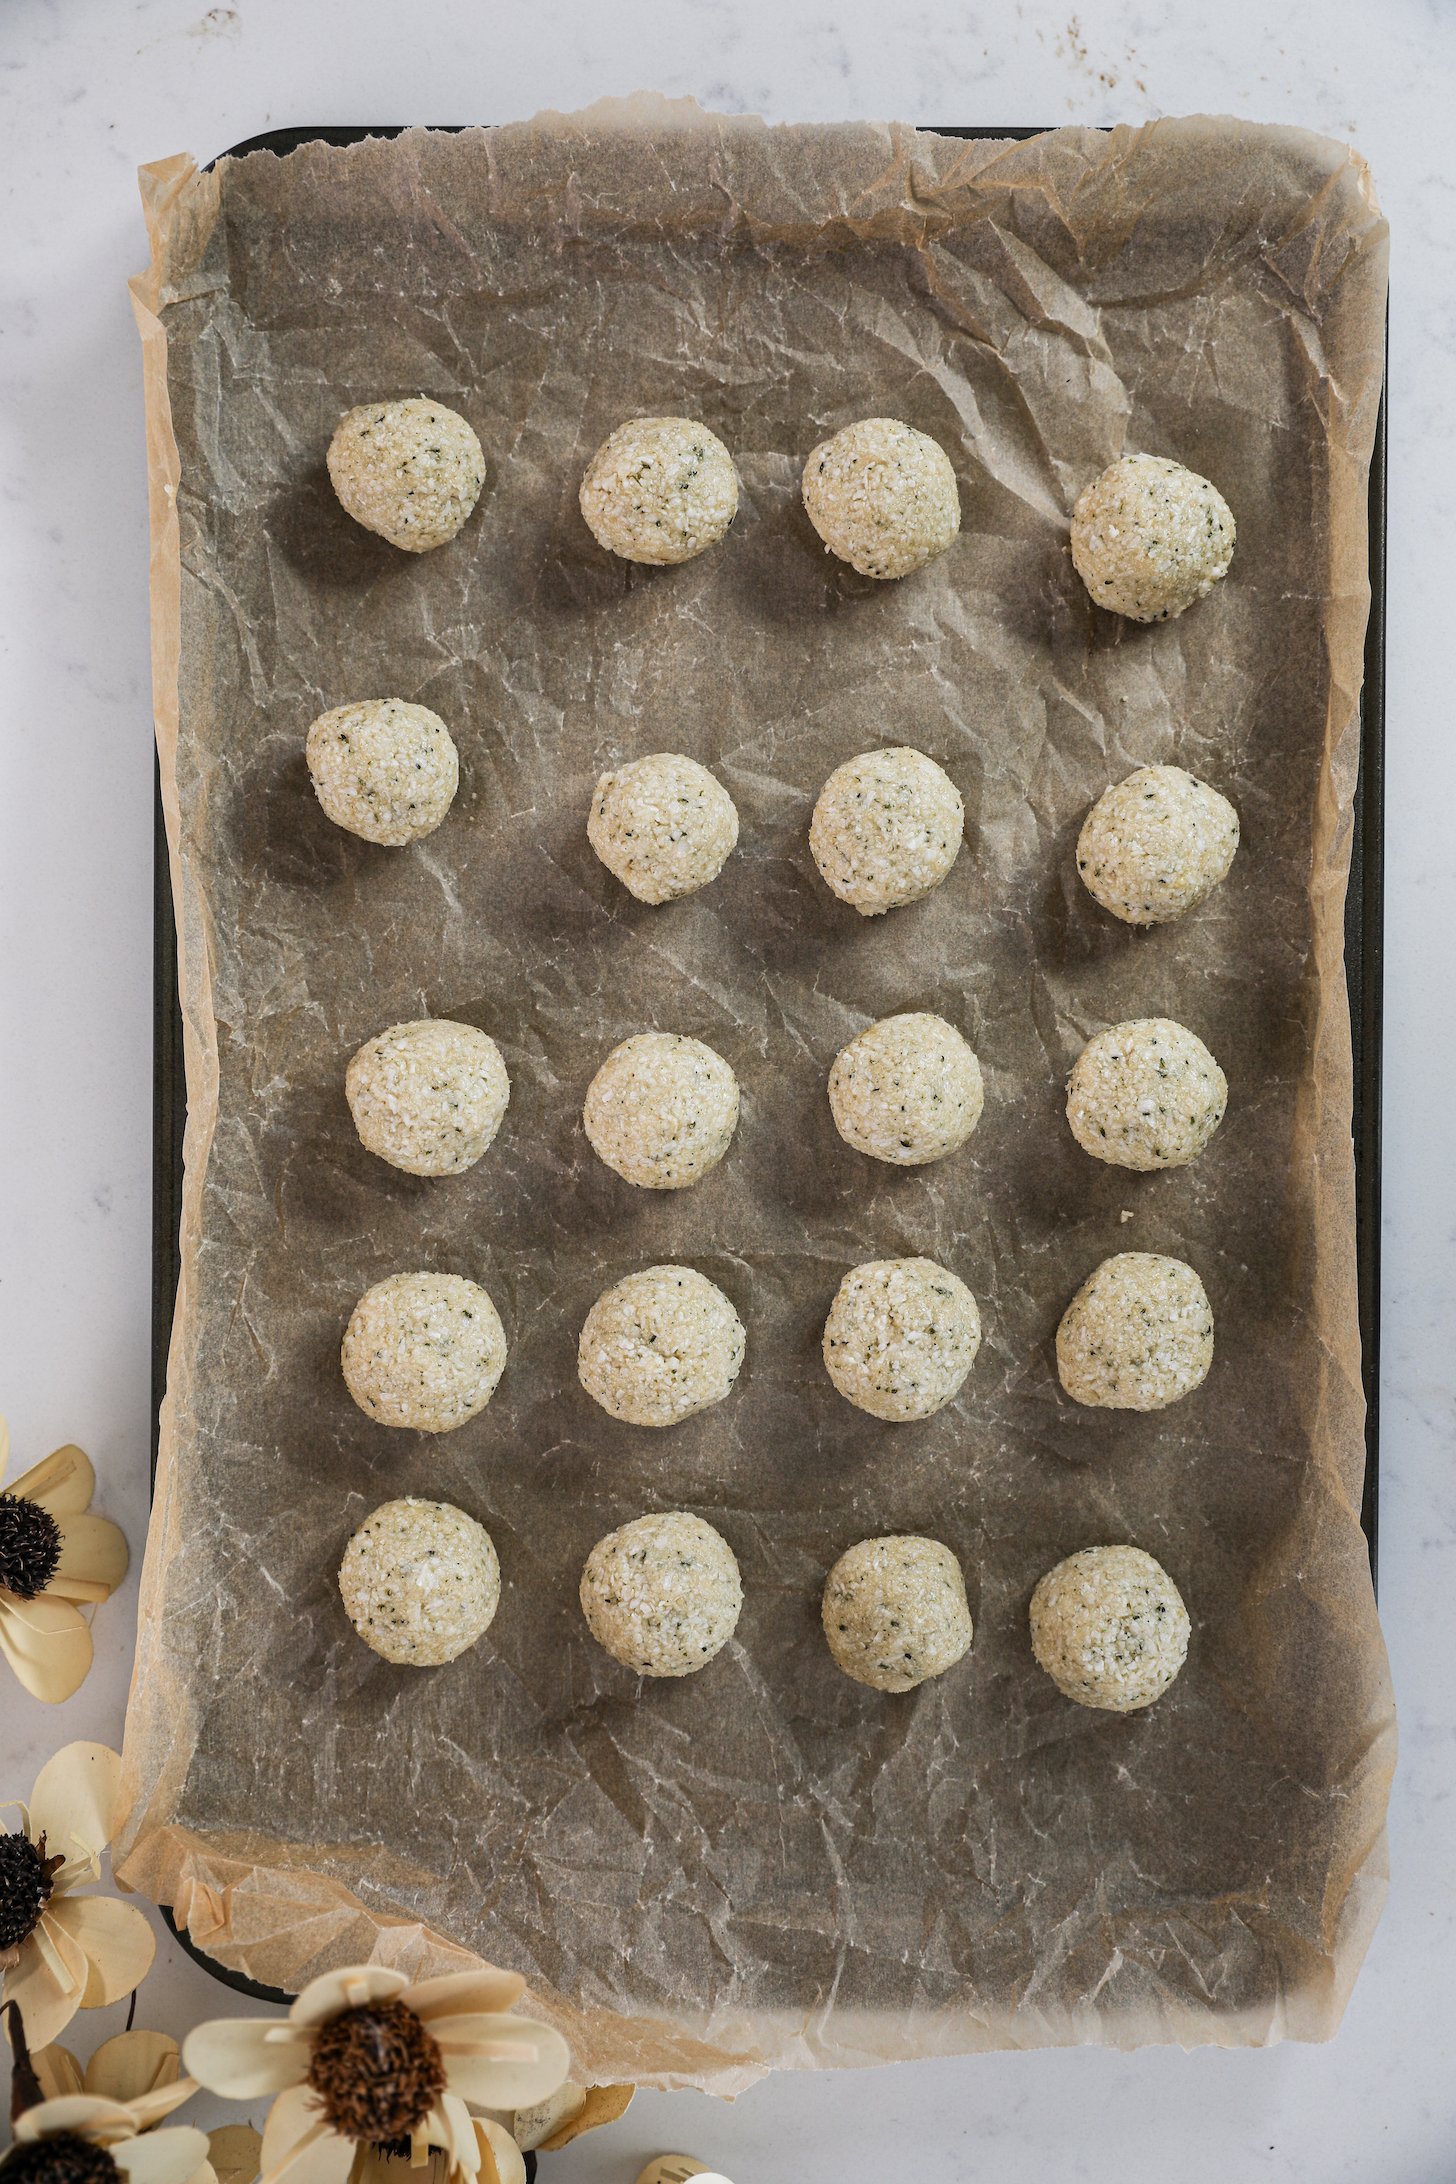 Twenty beige-coloured coconut balls neatly arranged on a lined baking sheet.